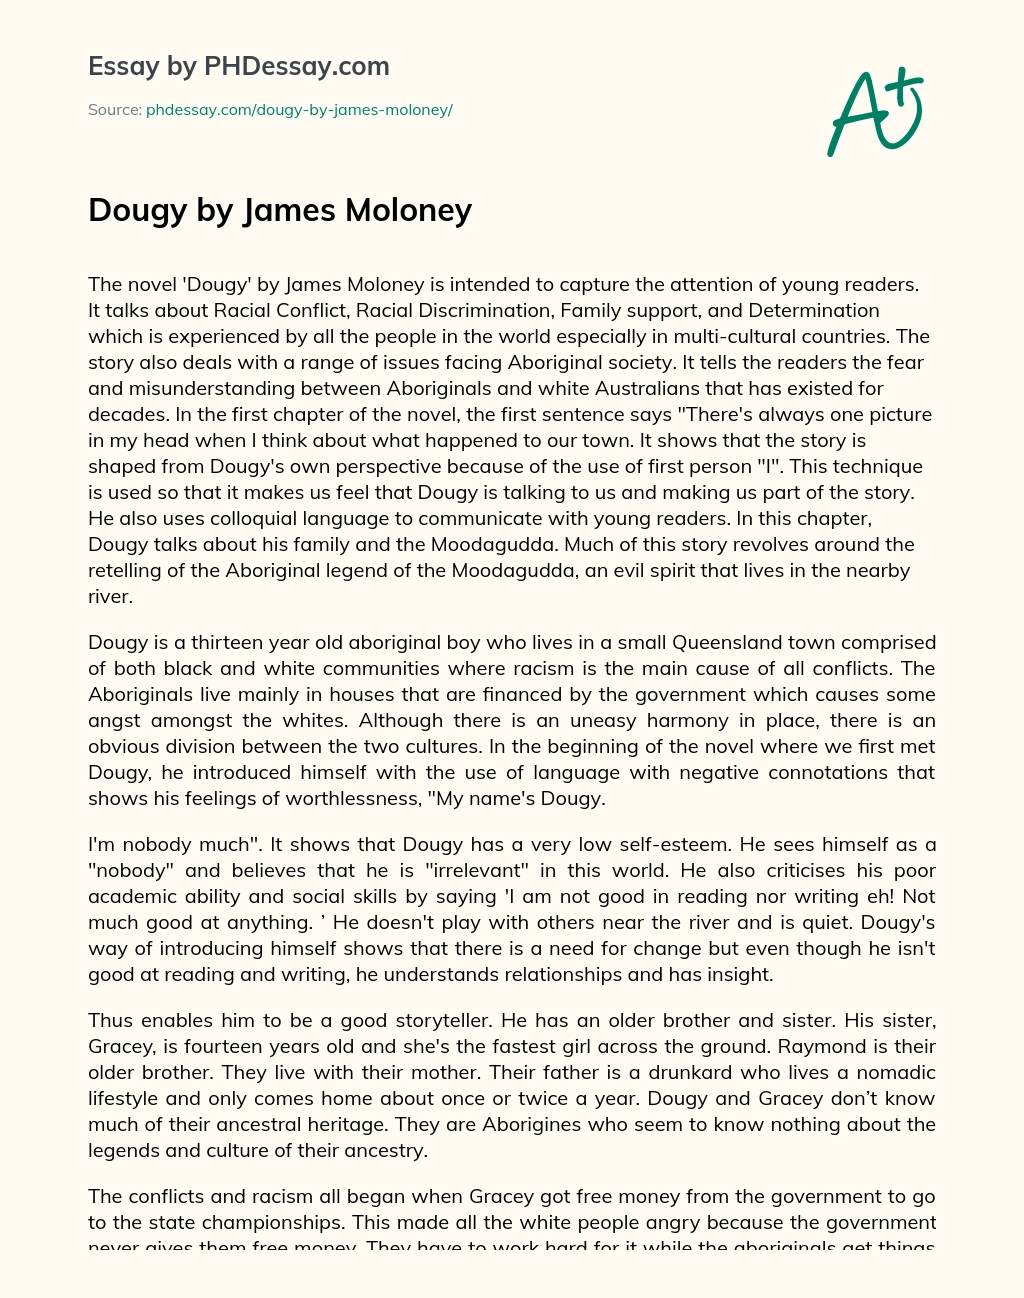 Dougy by James Moloney essay